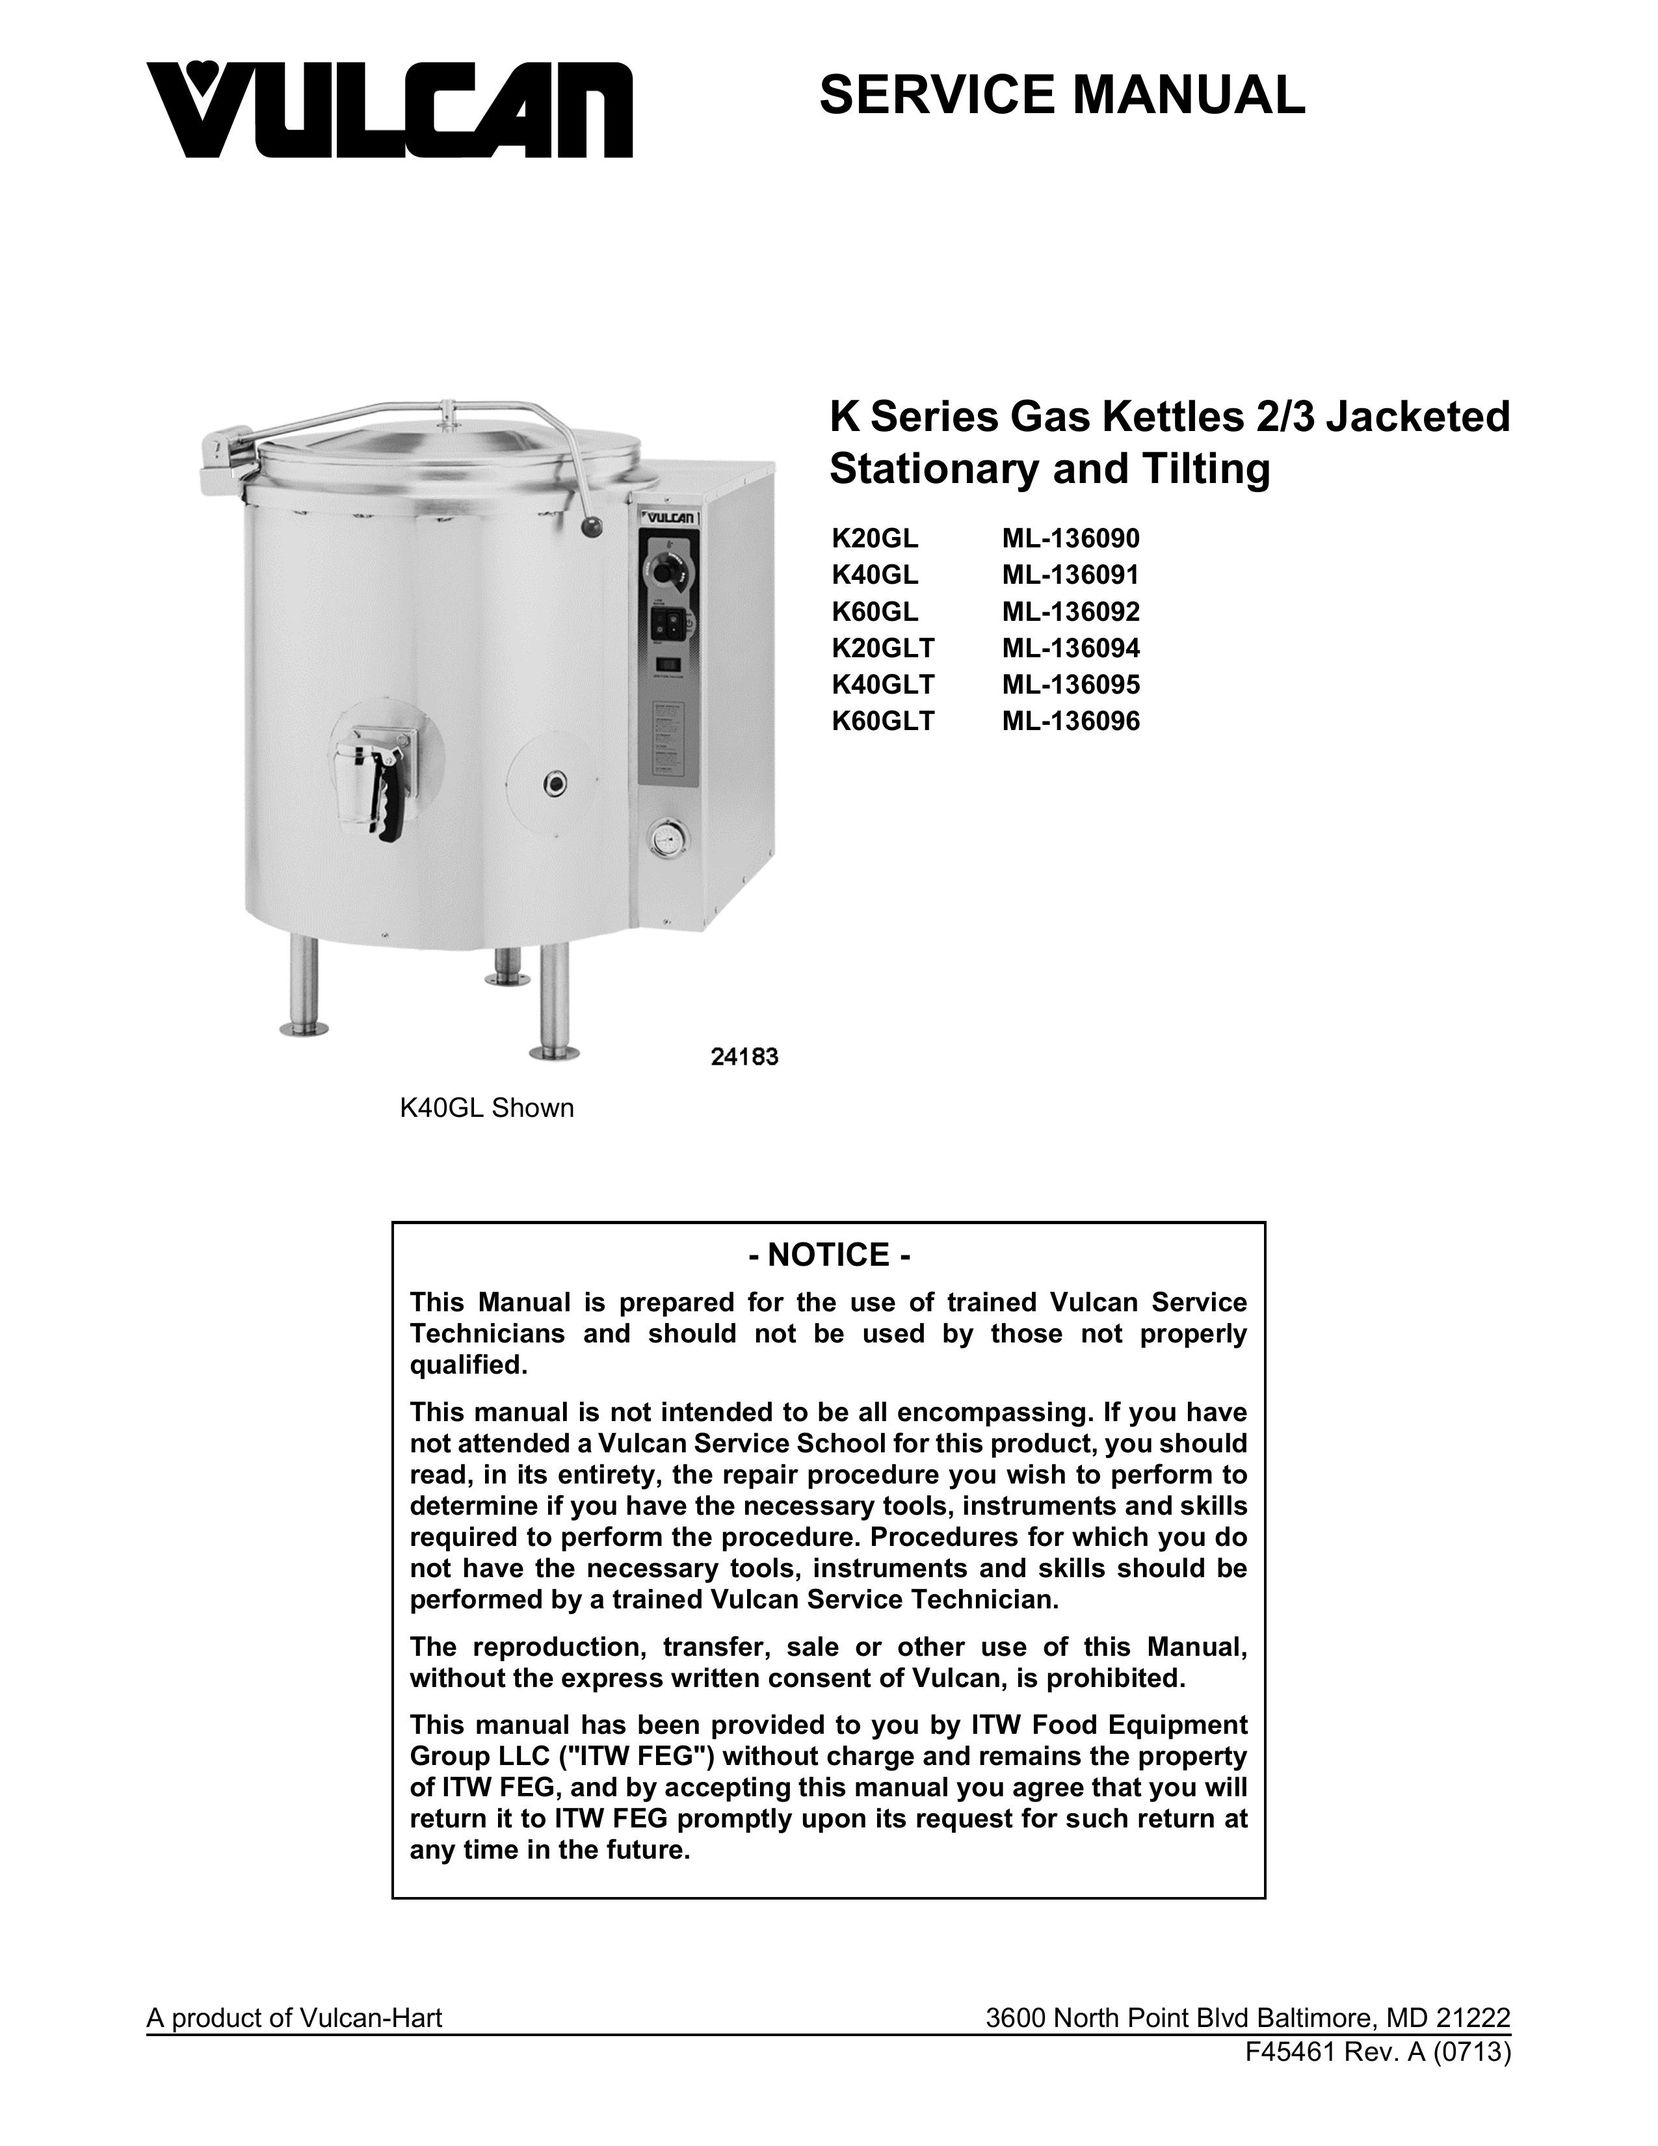 Vulcan-Hart K80GLT Hot Beverage Maker User Manual